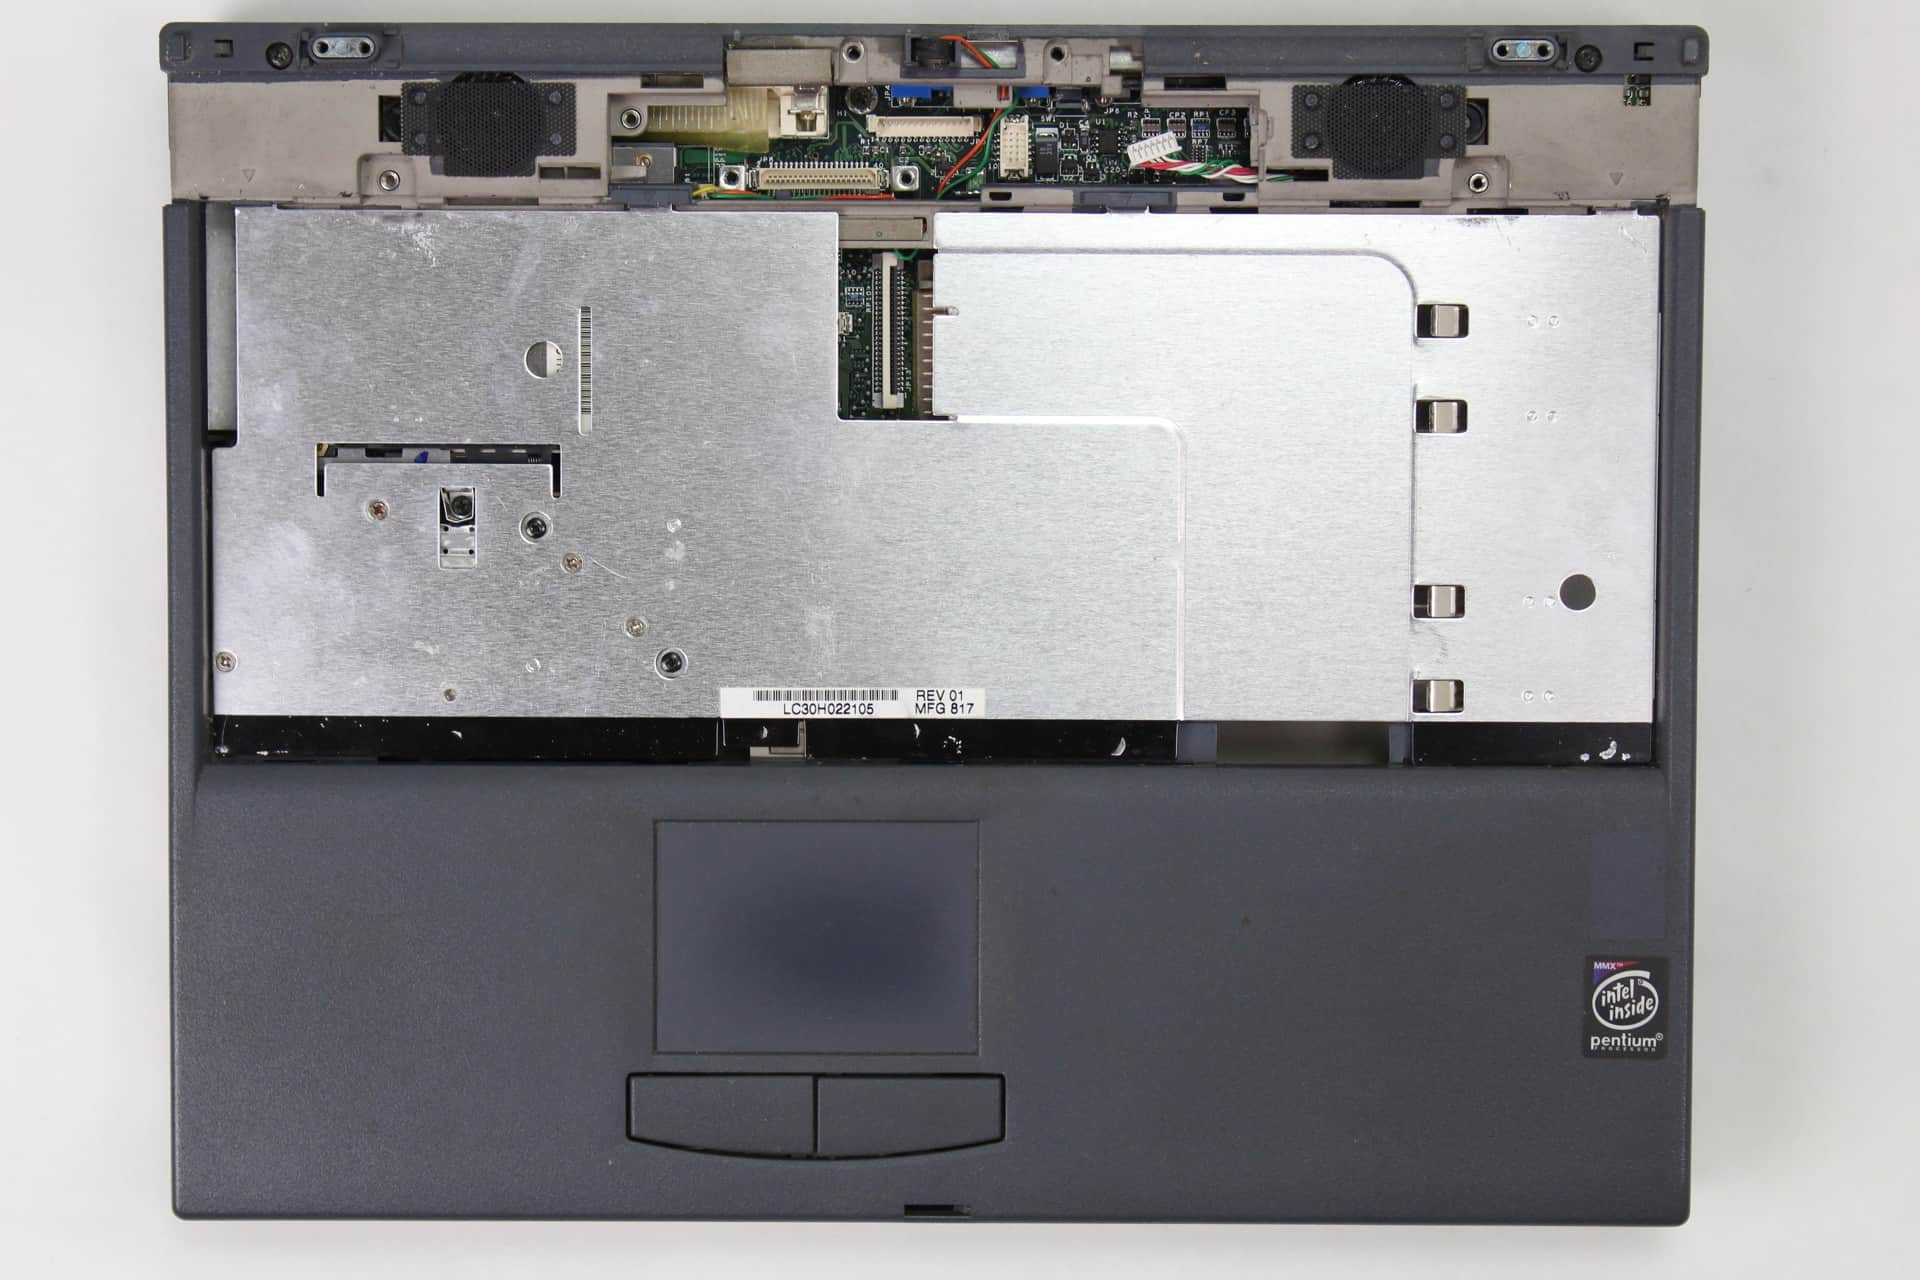 Hewlett Packard OmniBook 2100 - Odmontovaná klávesnice